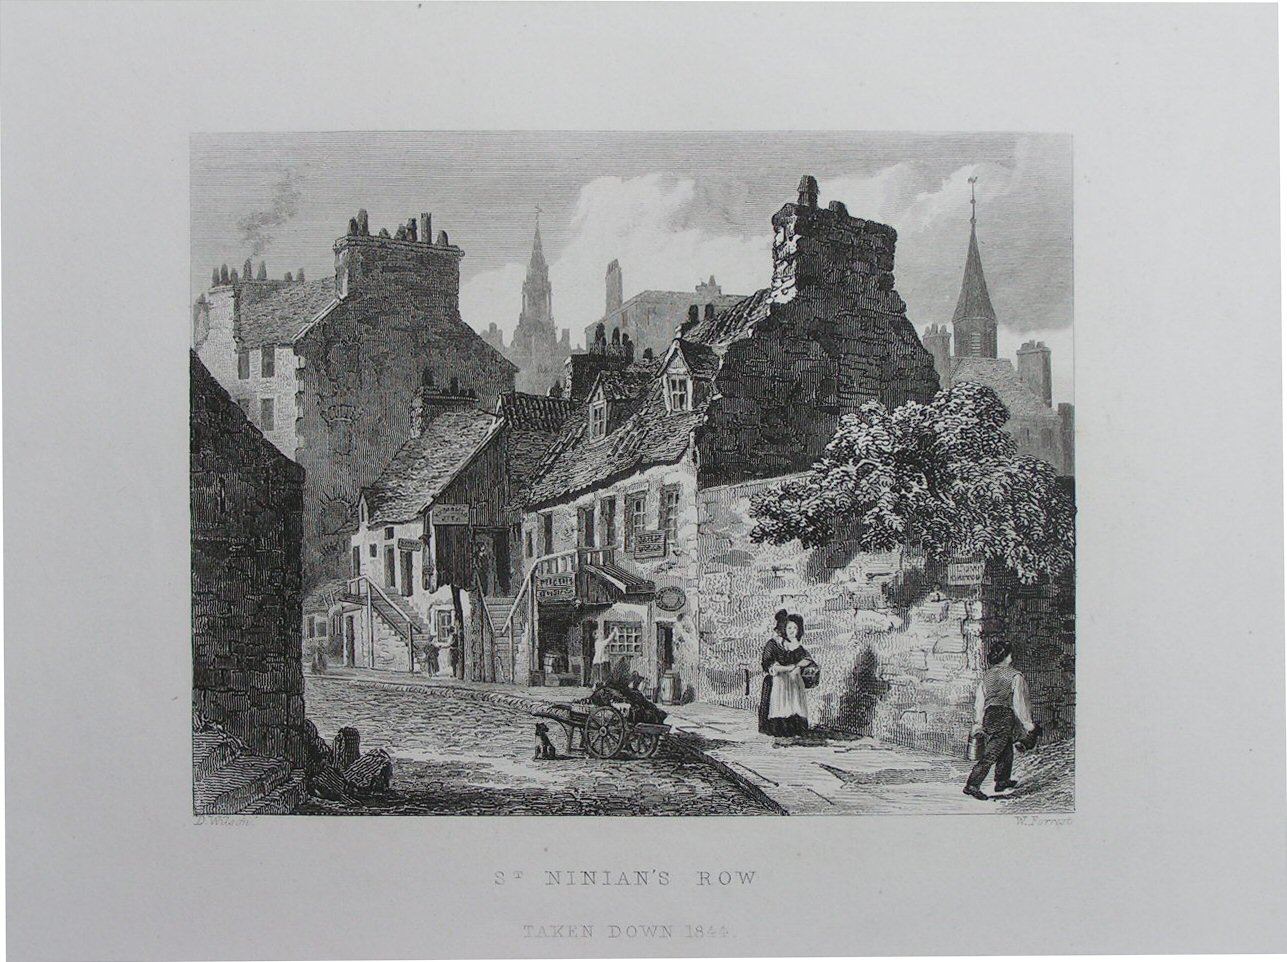 Print - St Ninian's Row Taken down 1844 - Forrest